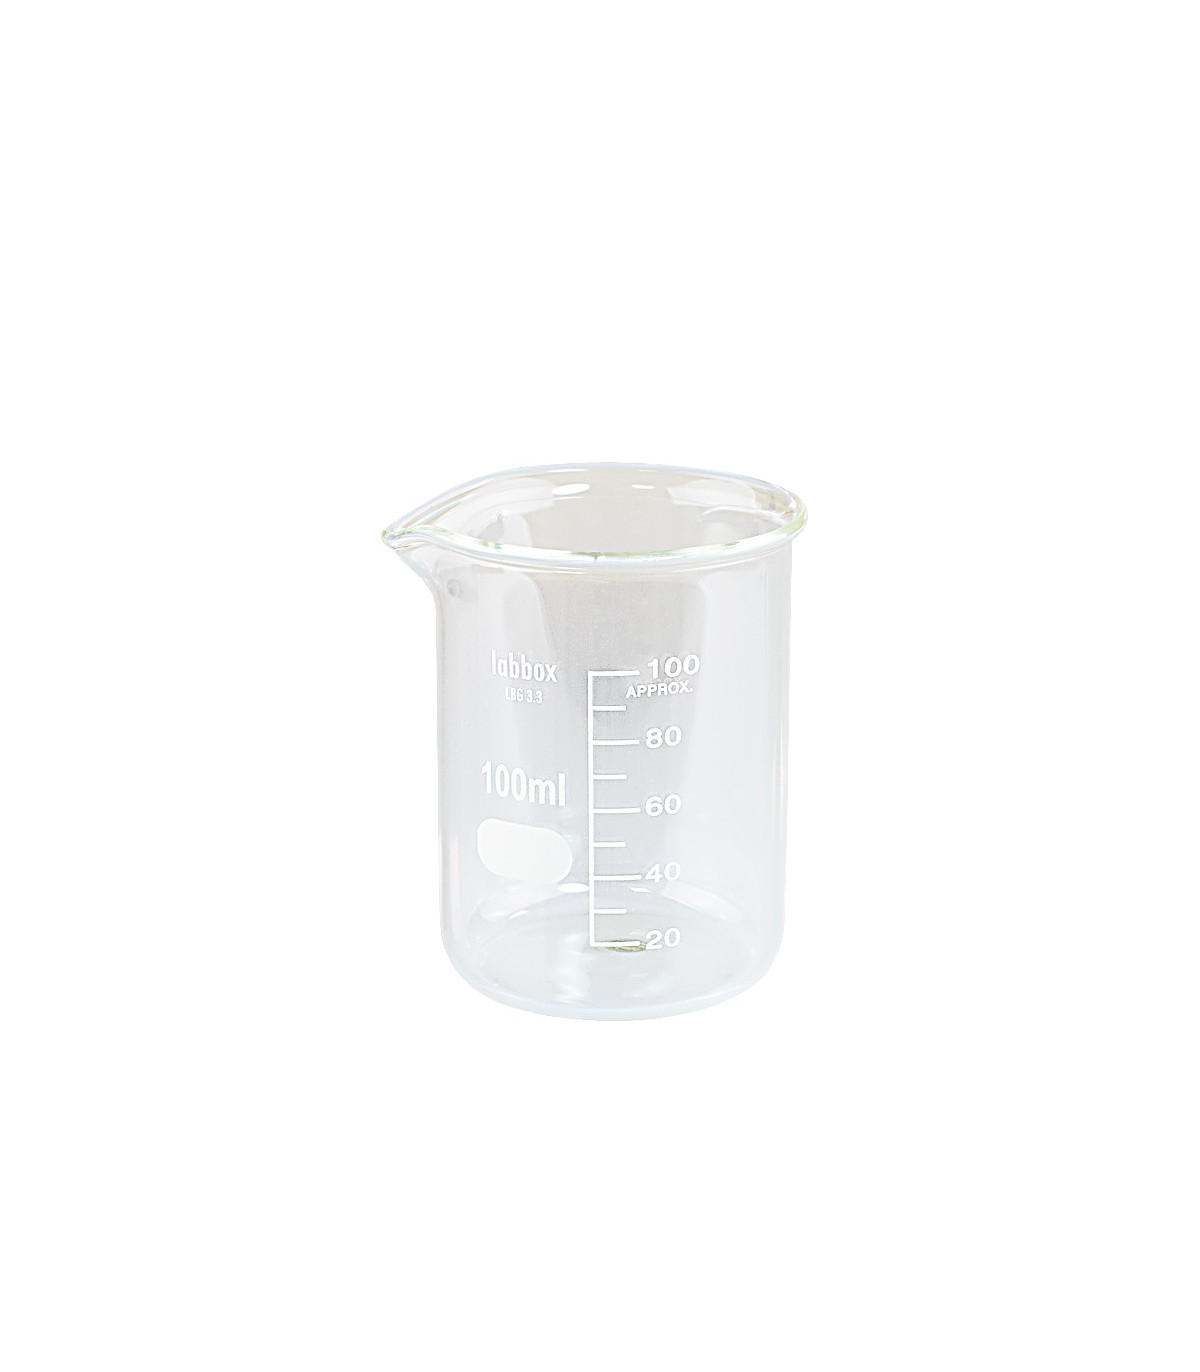 Pahar termorezistent sticlă Berzelius, 100 ml